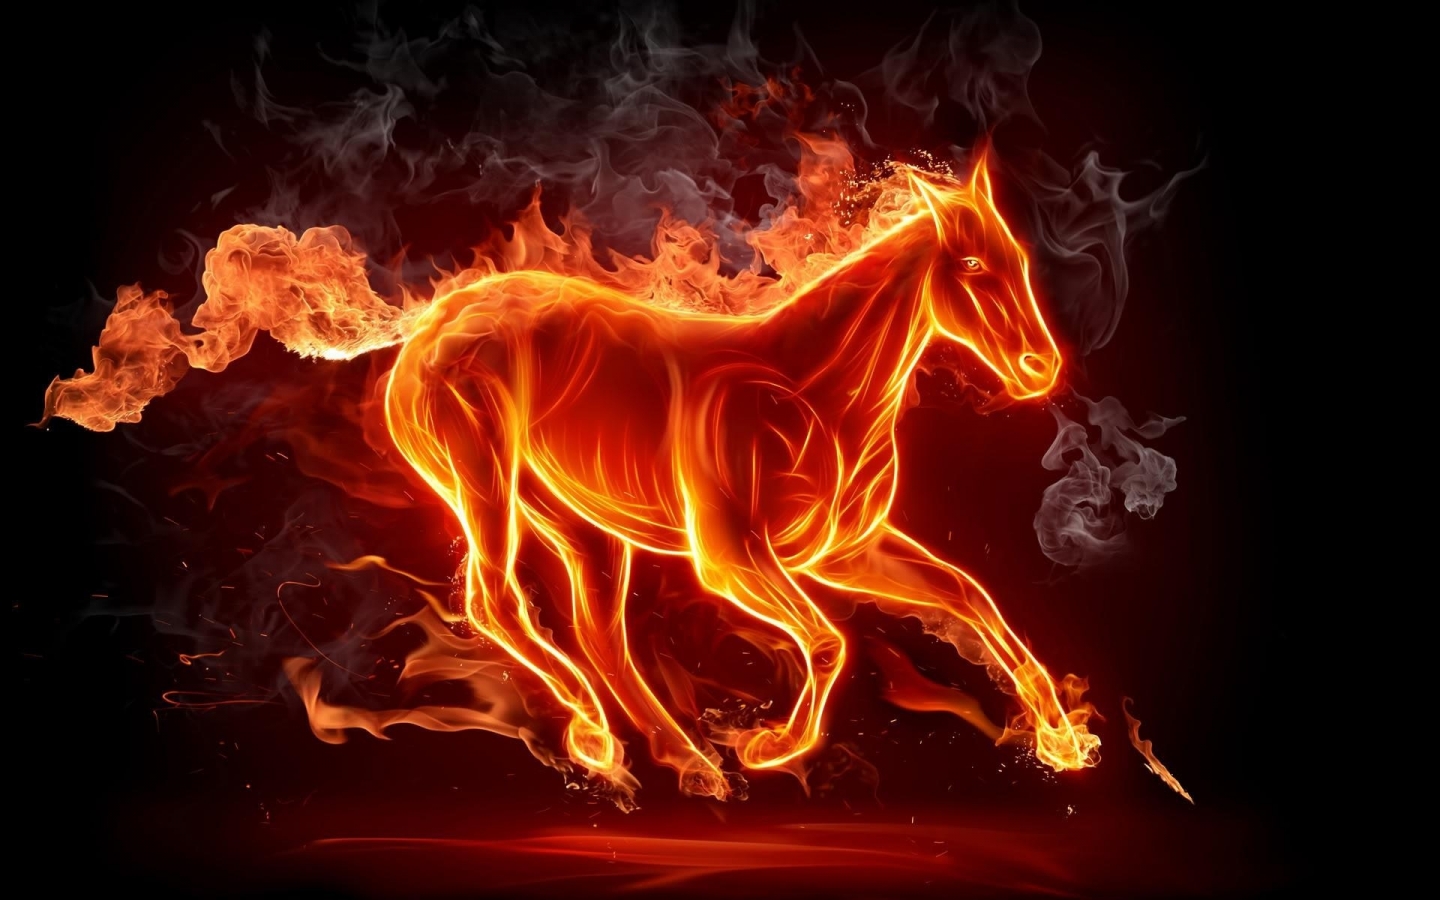 Fire Horse for 1440 x 900 widescreen resolution